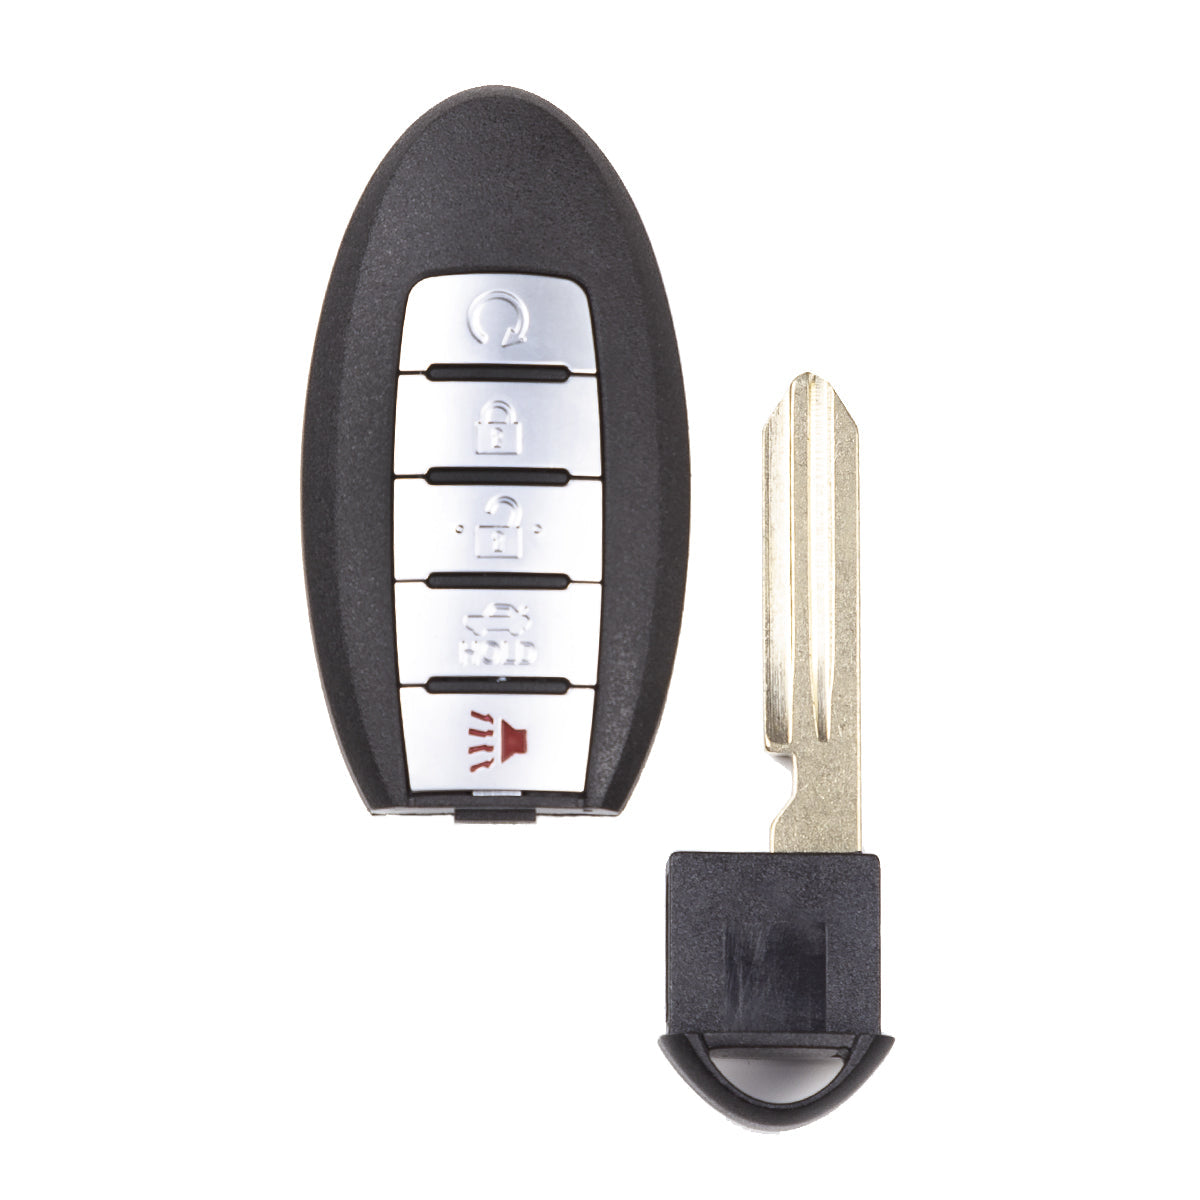 2015 Nissan Altima Smart Key w/ Remote Start 5 Buttons Fob FCC# R5S180144014 - Aftermarket